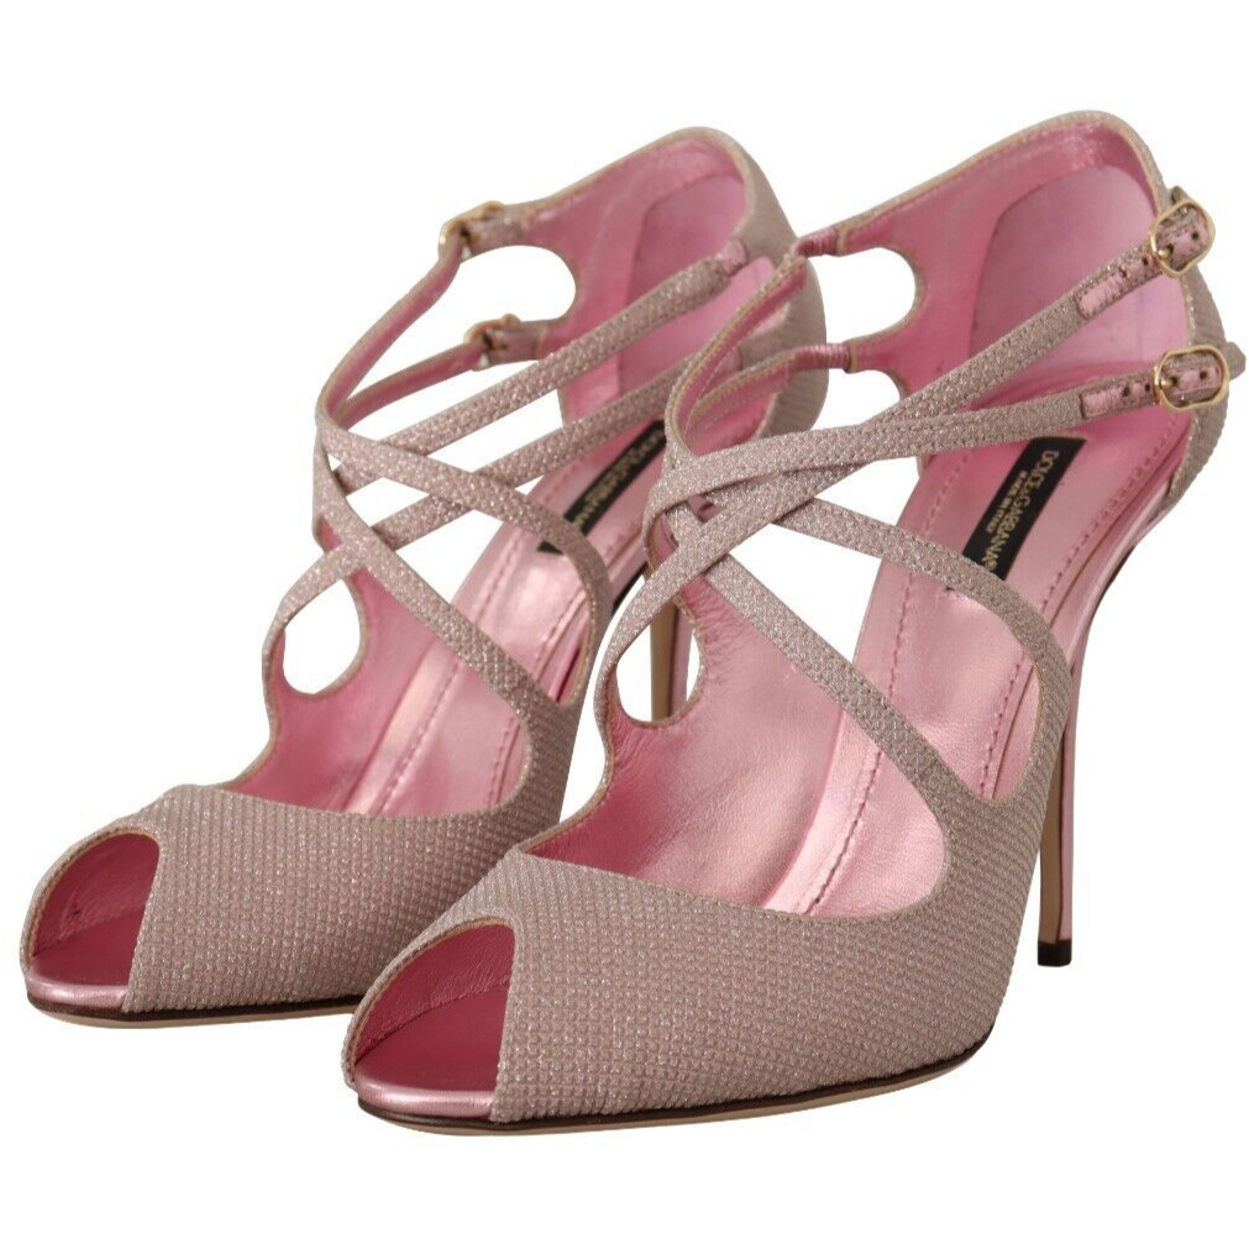 Dolce & Gabbana Pink Glitter Peep Toe High Heels Sandals pink-glittered-strappy-heels-sandals-shoes s-l1600-1-2-2afd815f-d93.png